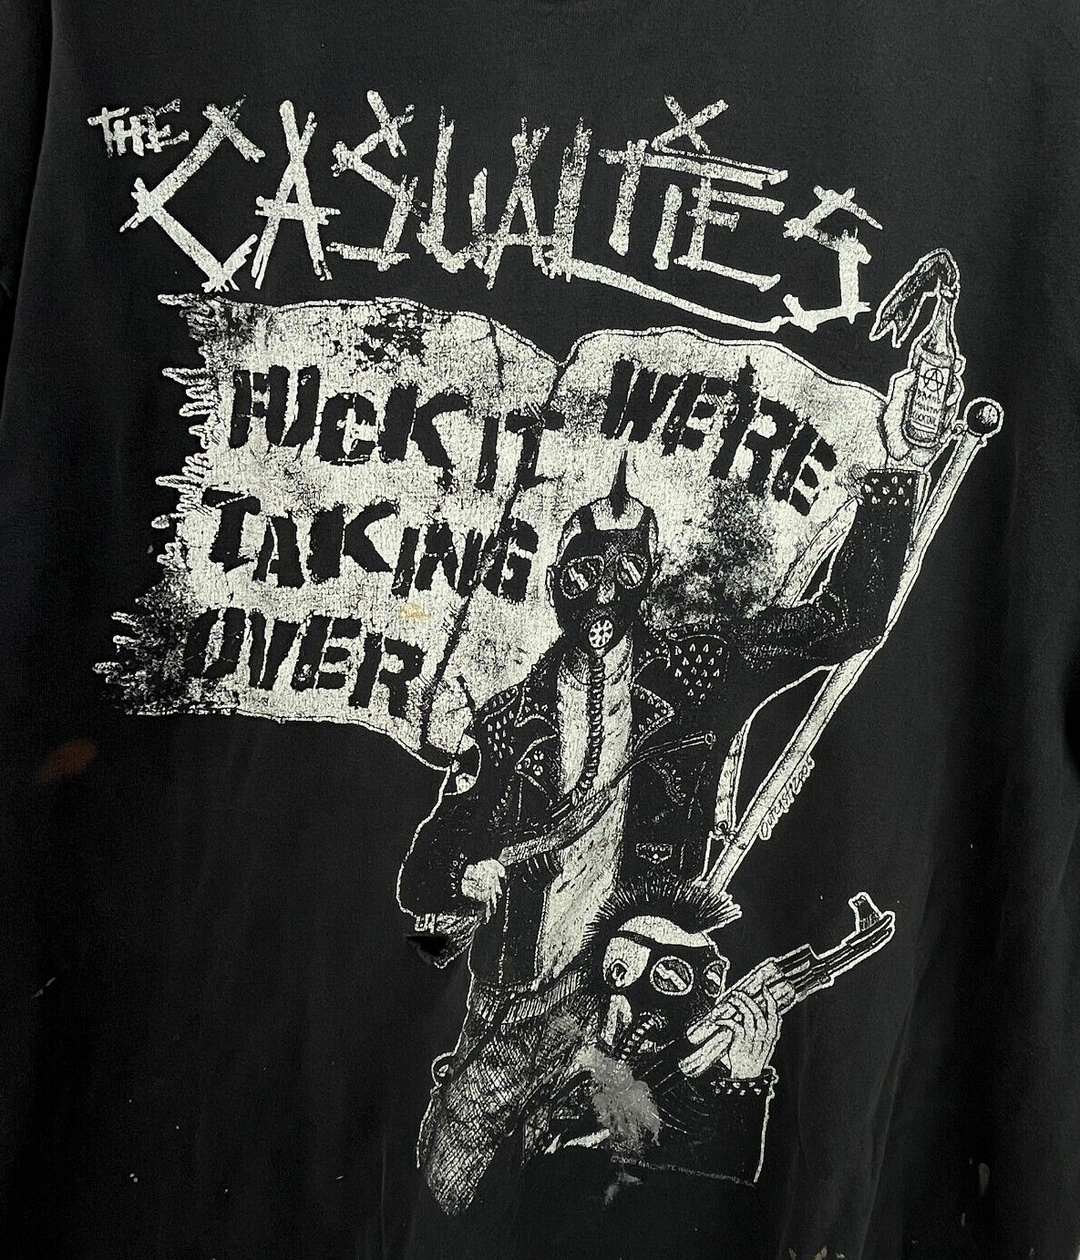 The Casualties Vintage Hardcore Crust Punk Rock Band Black T-shirt Size XL